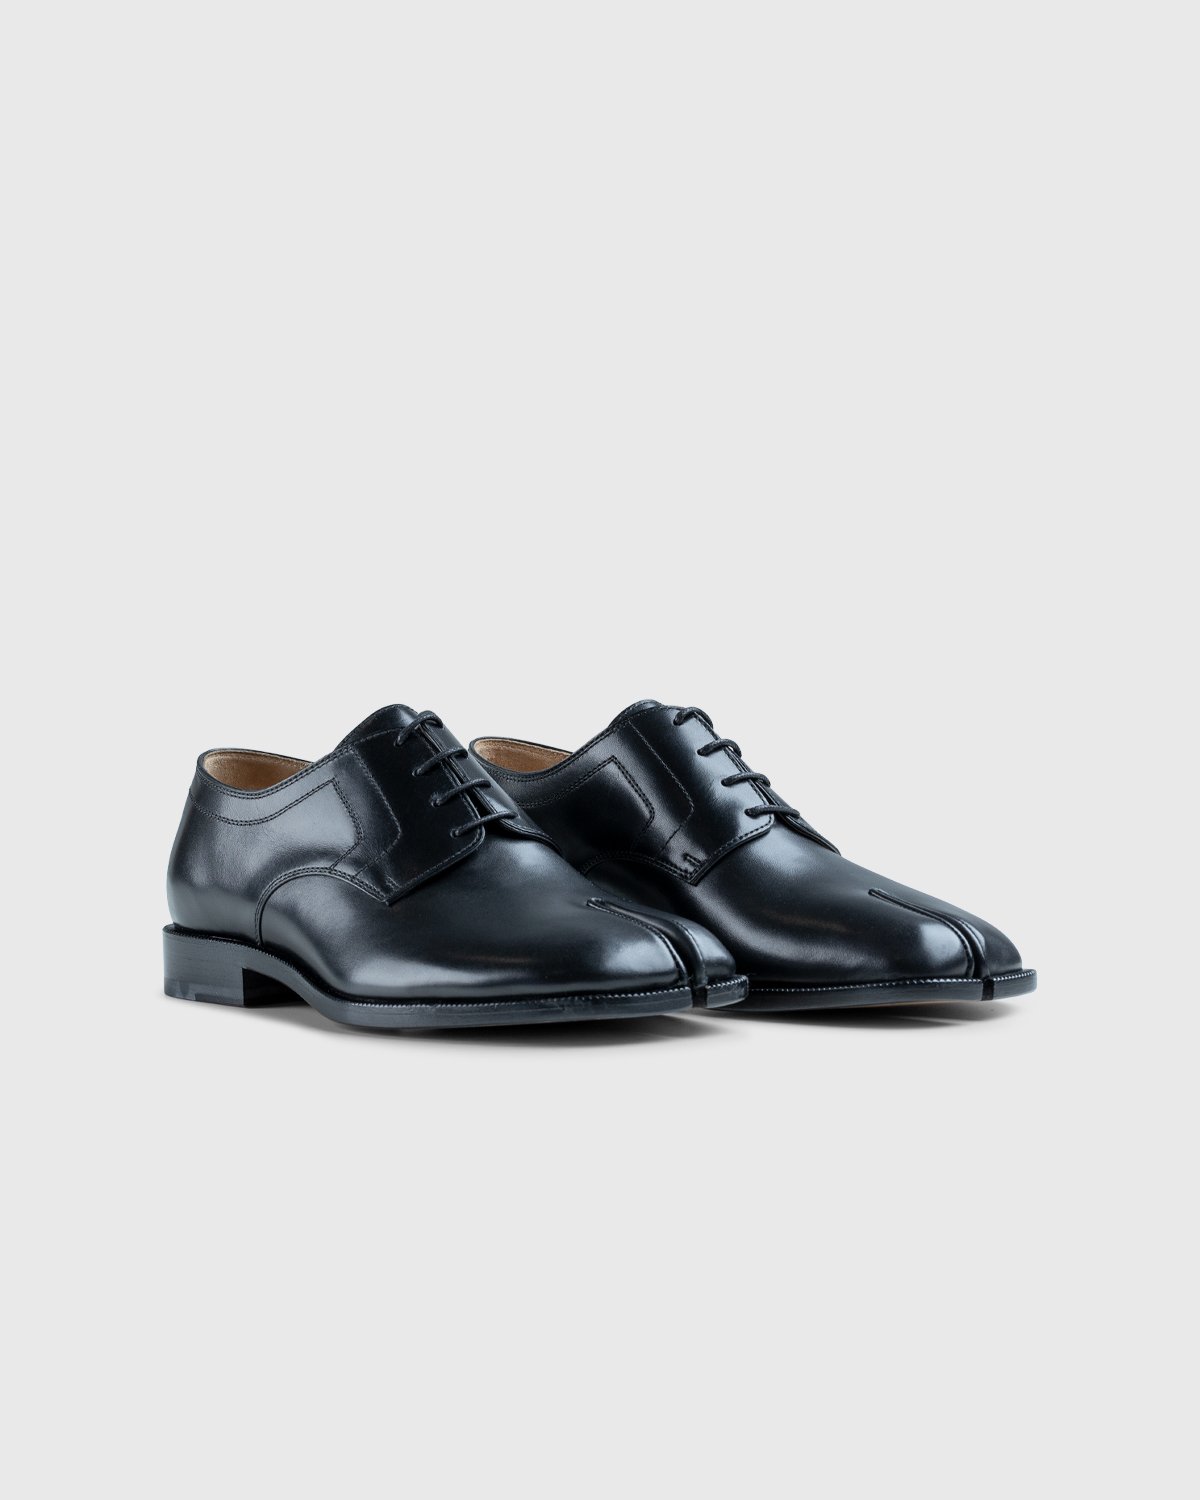 Maison Margiela - Tabi Lace-up Shoes Black - Footwear - Black - Image 2